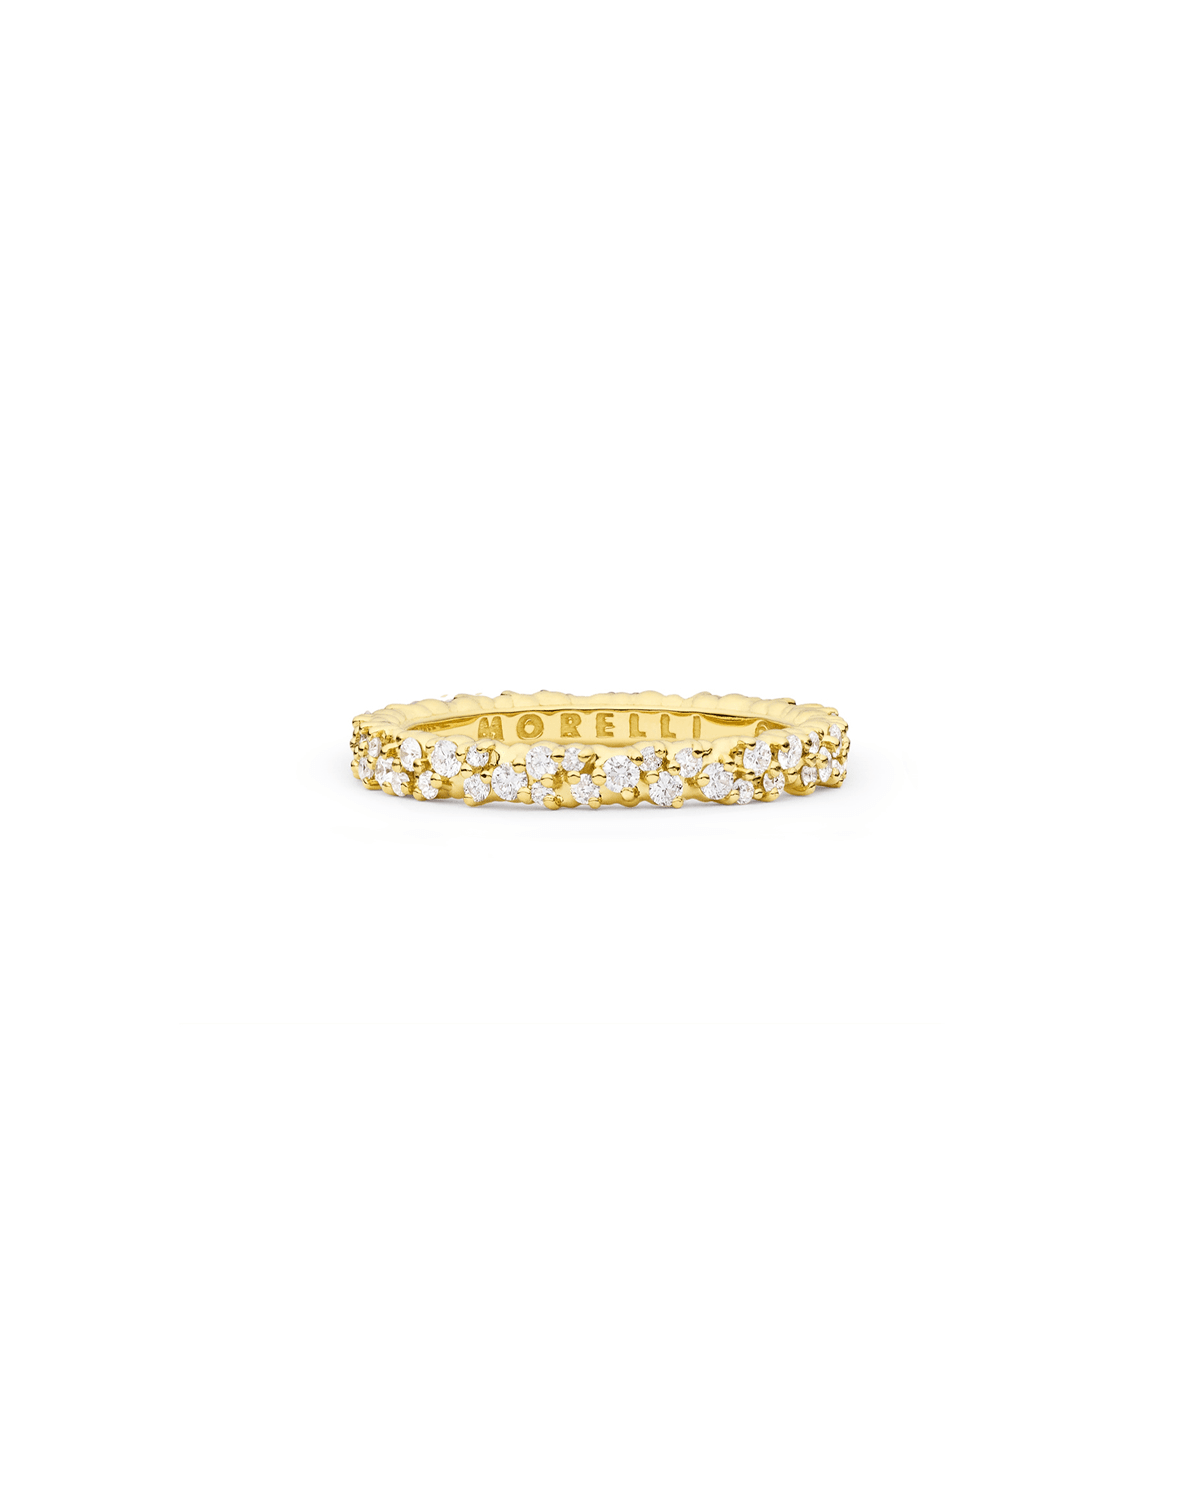 Confetti 18k Yellow Gold Ring with White Diamonds, Size 6.5